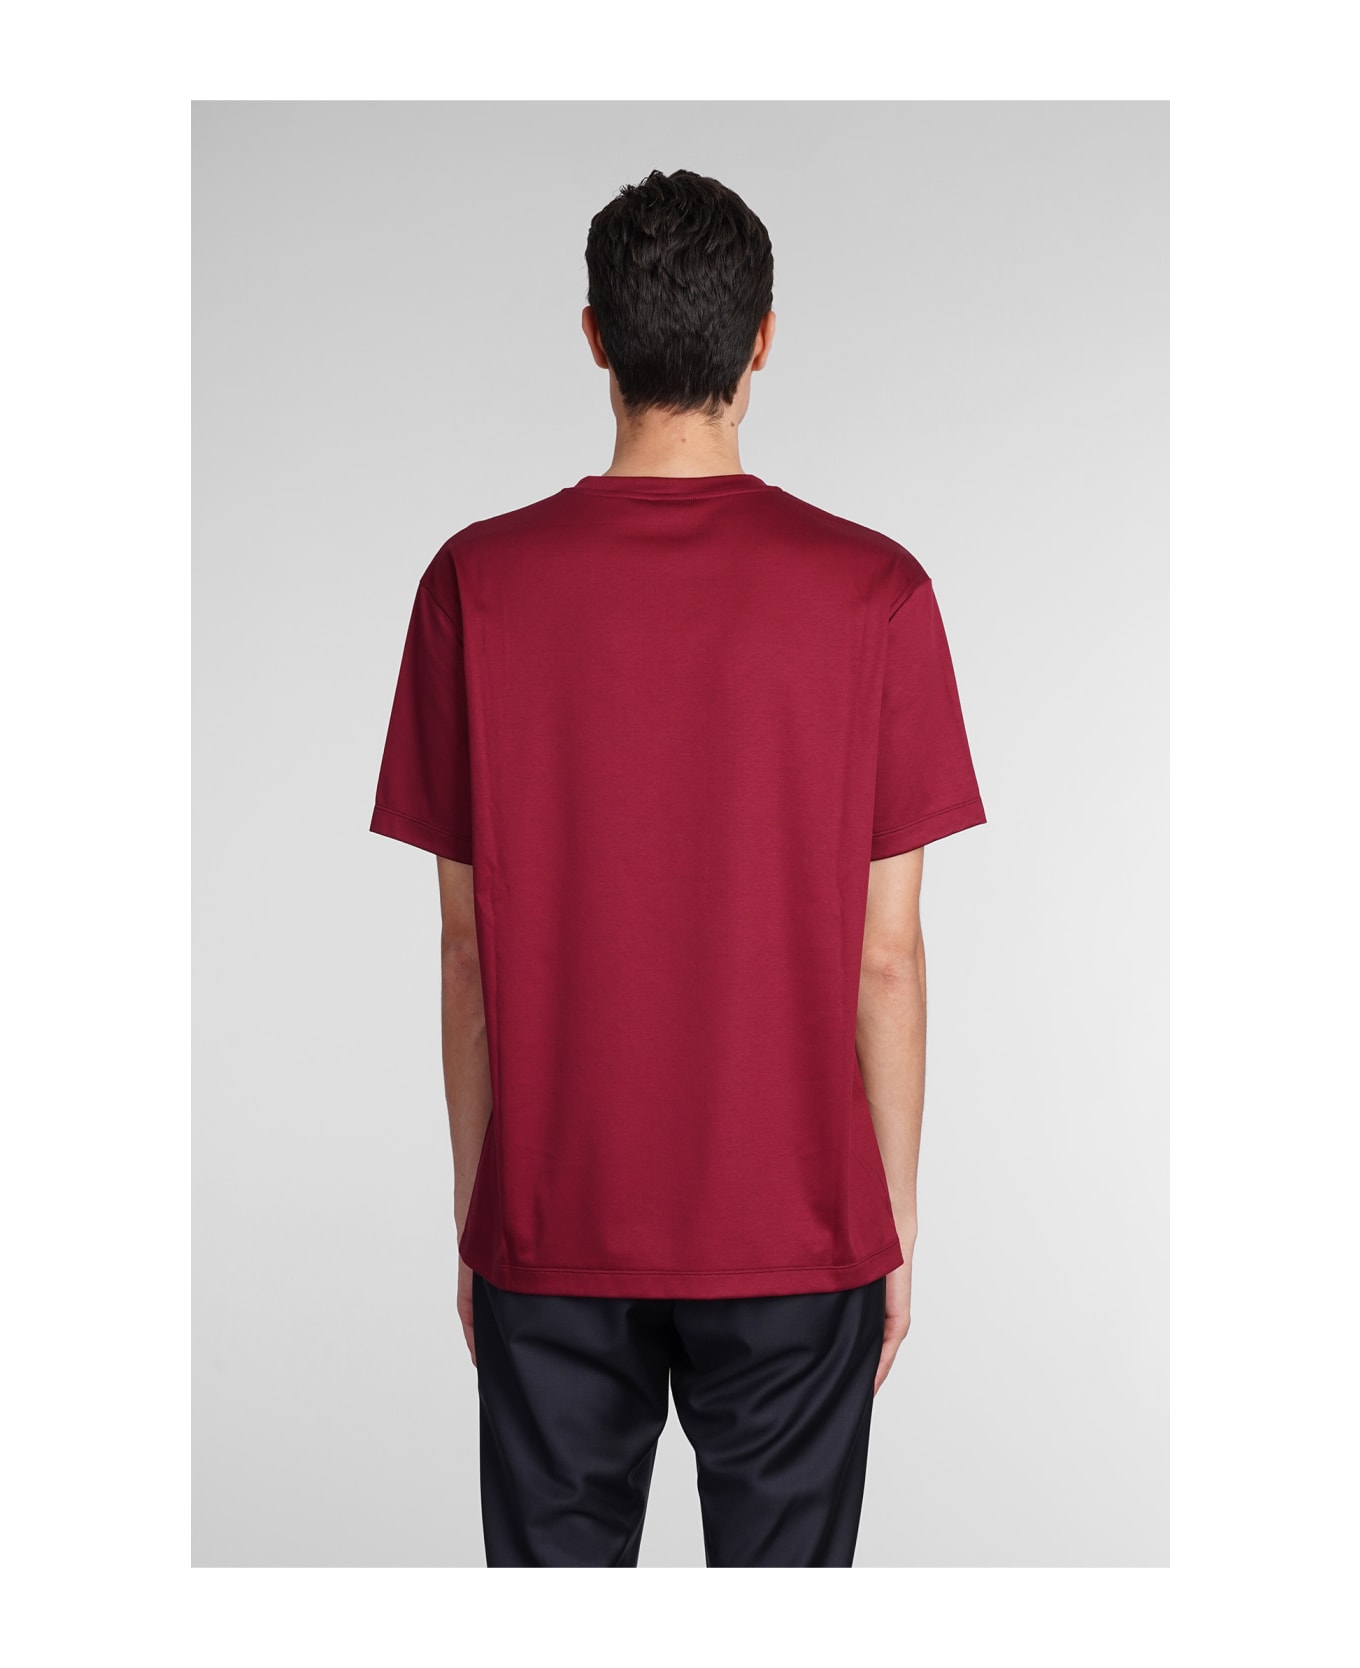 Giorgio Armani T-shirt In Bordeaux Cotton - bordeaux